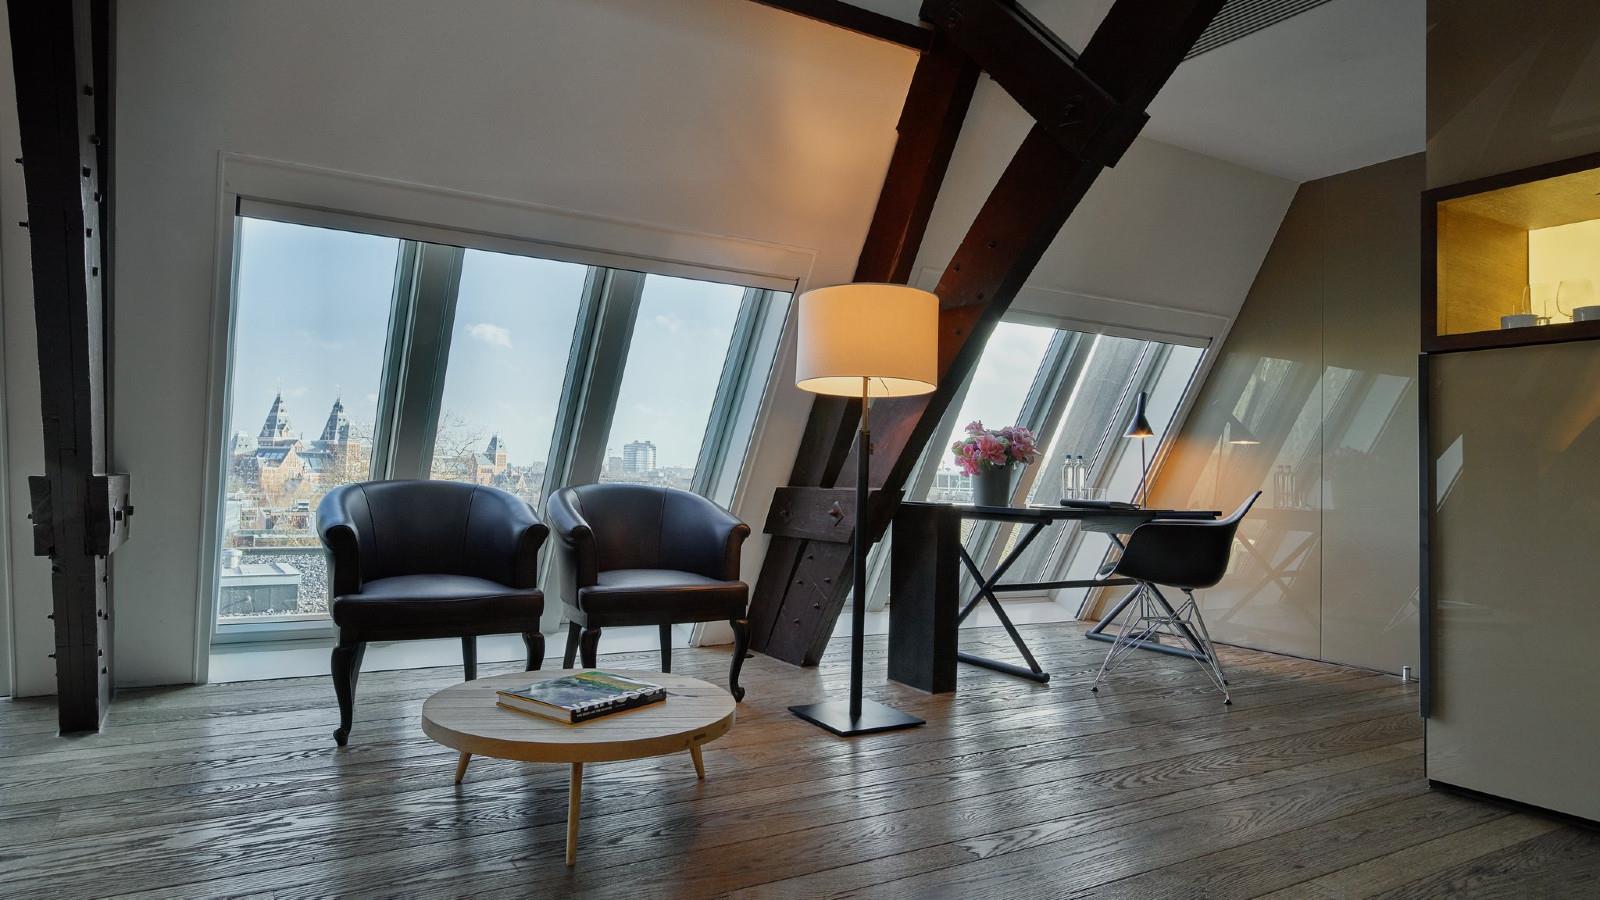 Keylite provides bespoke roof windows for landmark Amsterdam hotel image